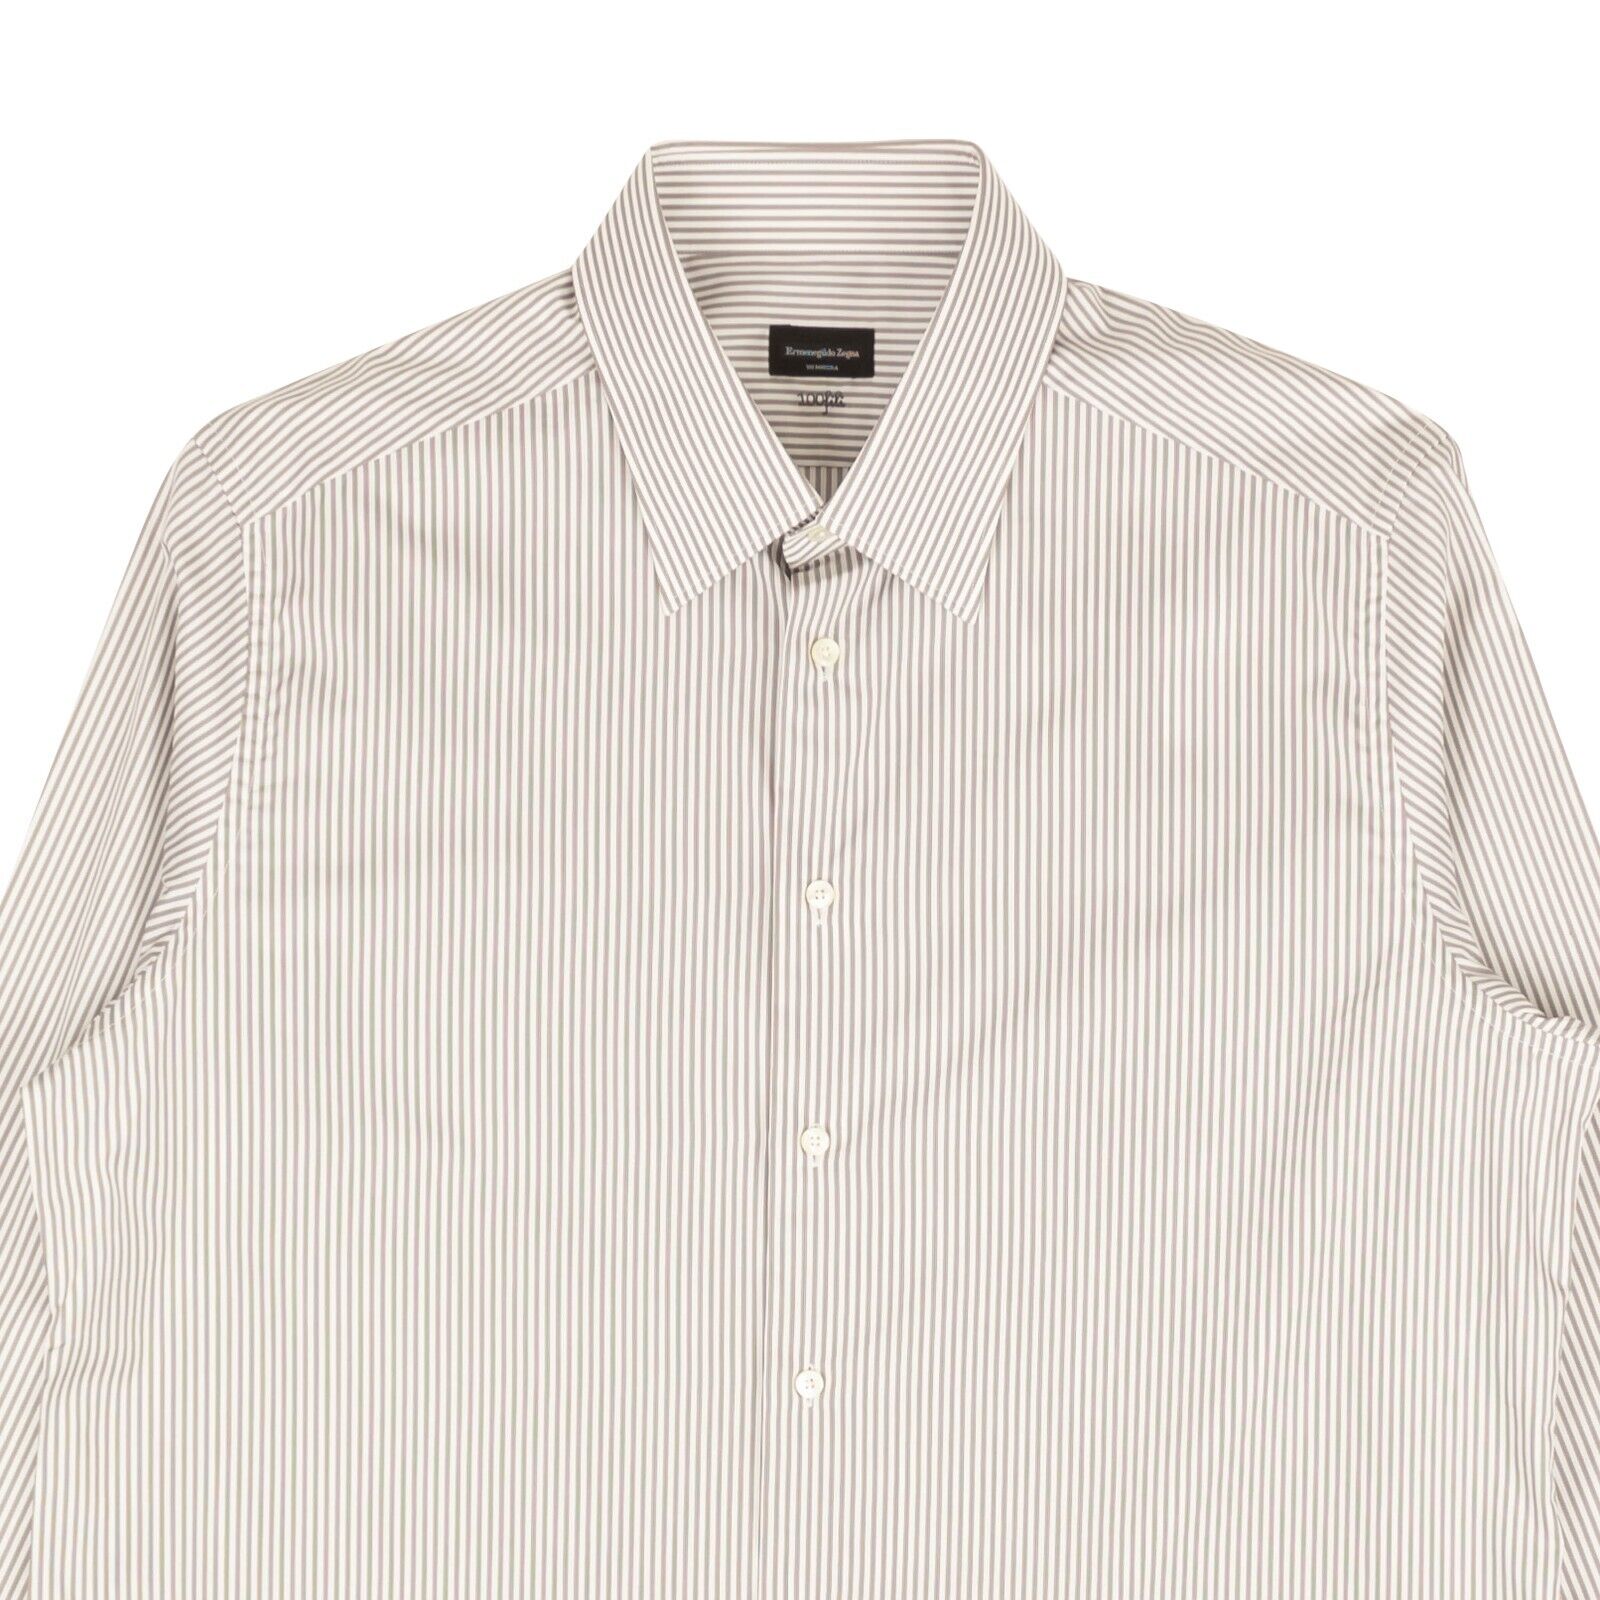 Ermenegildo Zegna Stripe Dress Shirt - Taupe